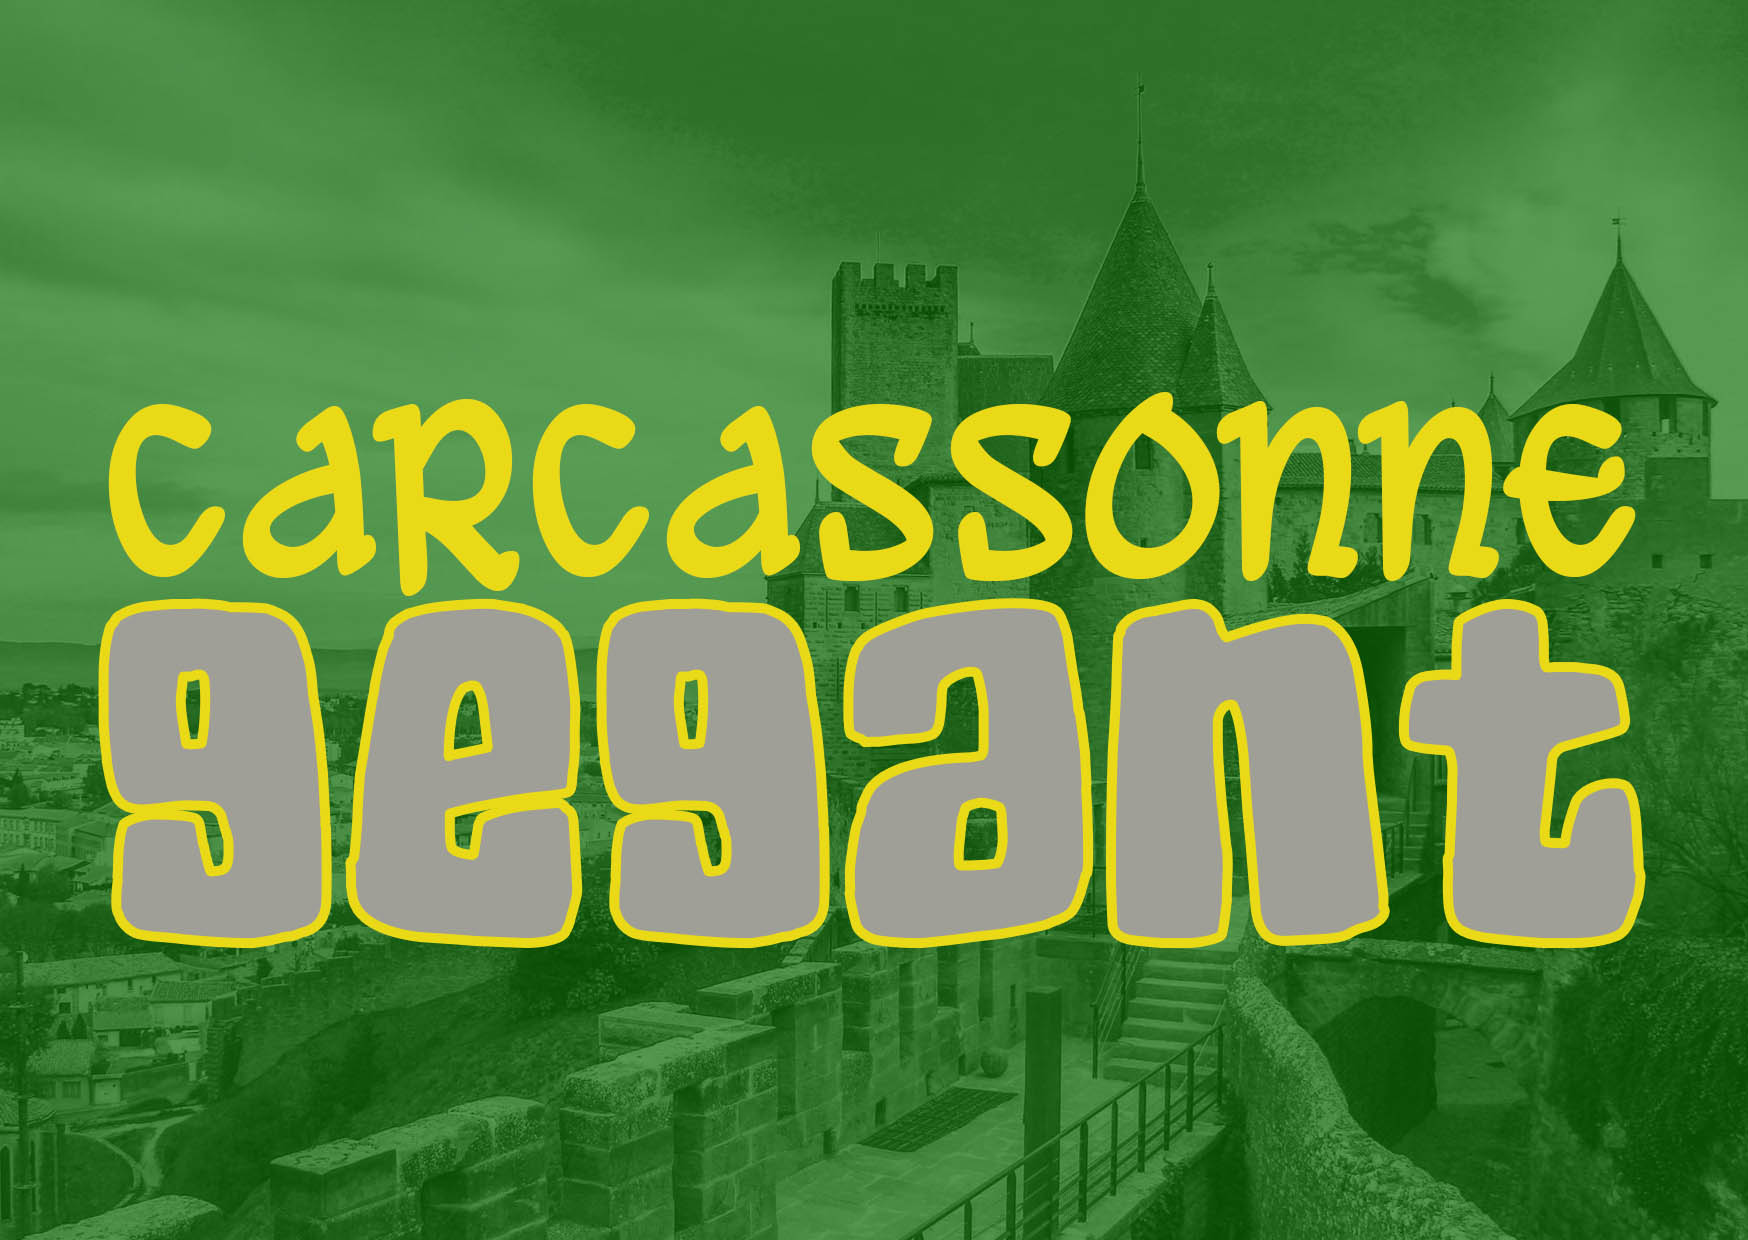 logo "Carcassonne gegant" team building